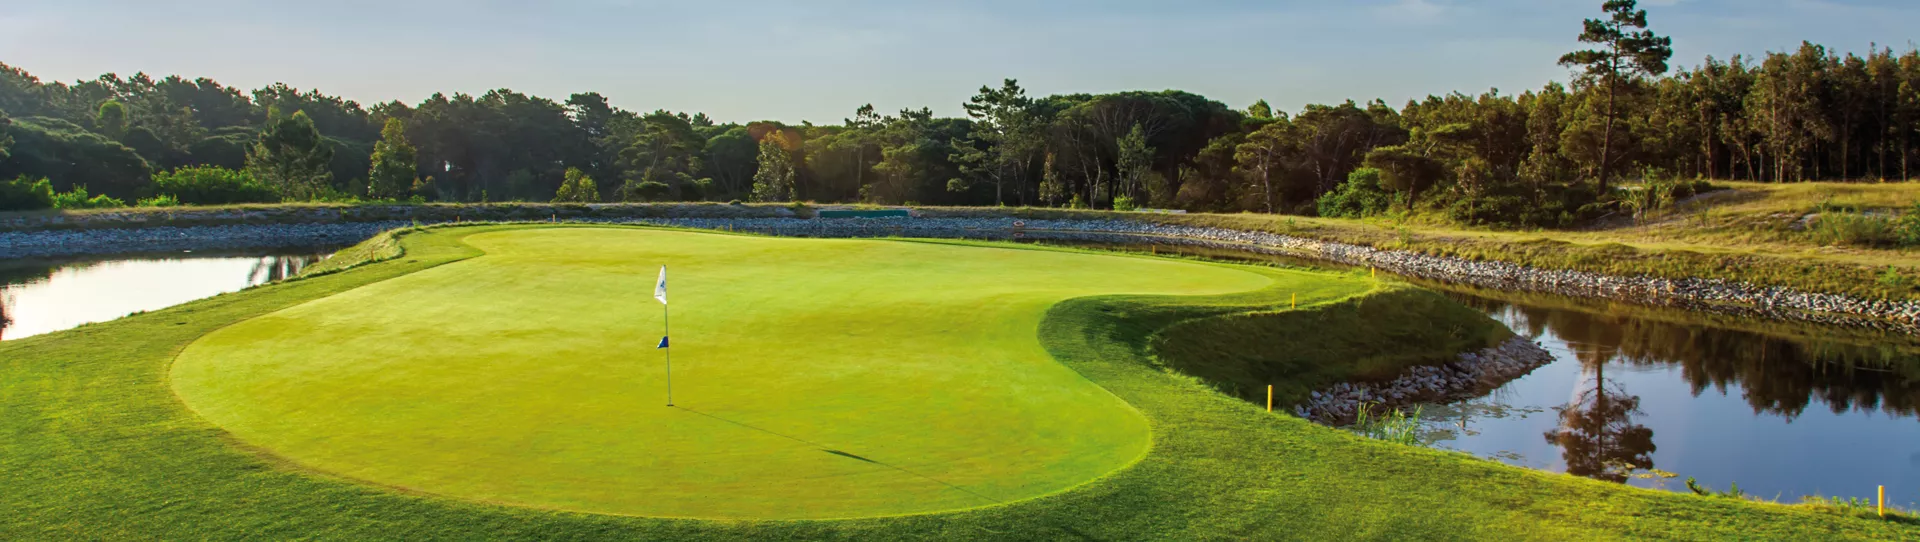 Portugal golf courses - Royal Obidos - Photo 1